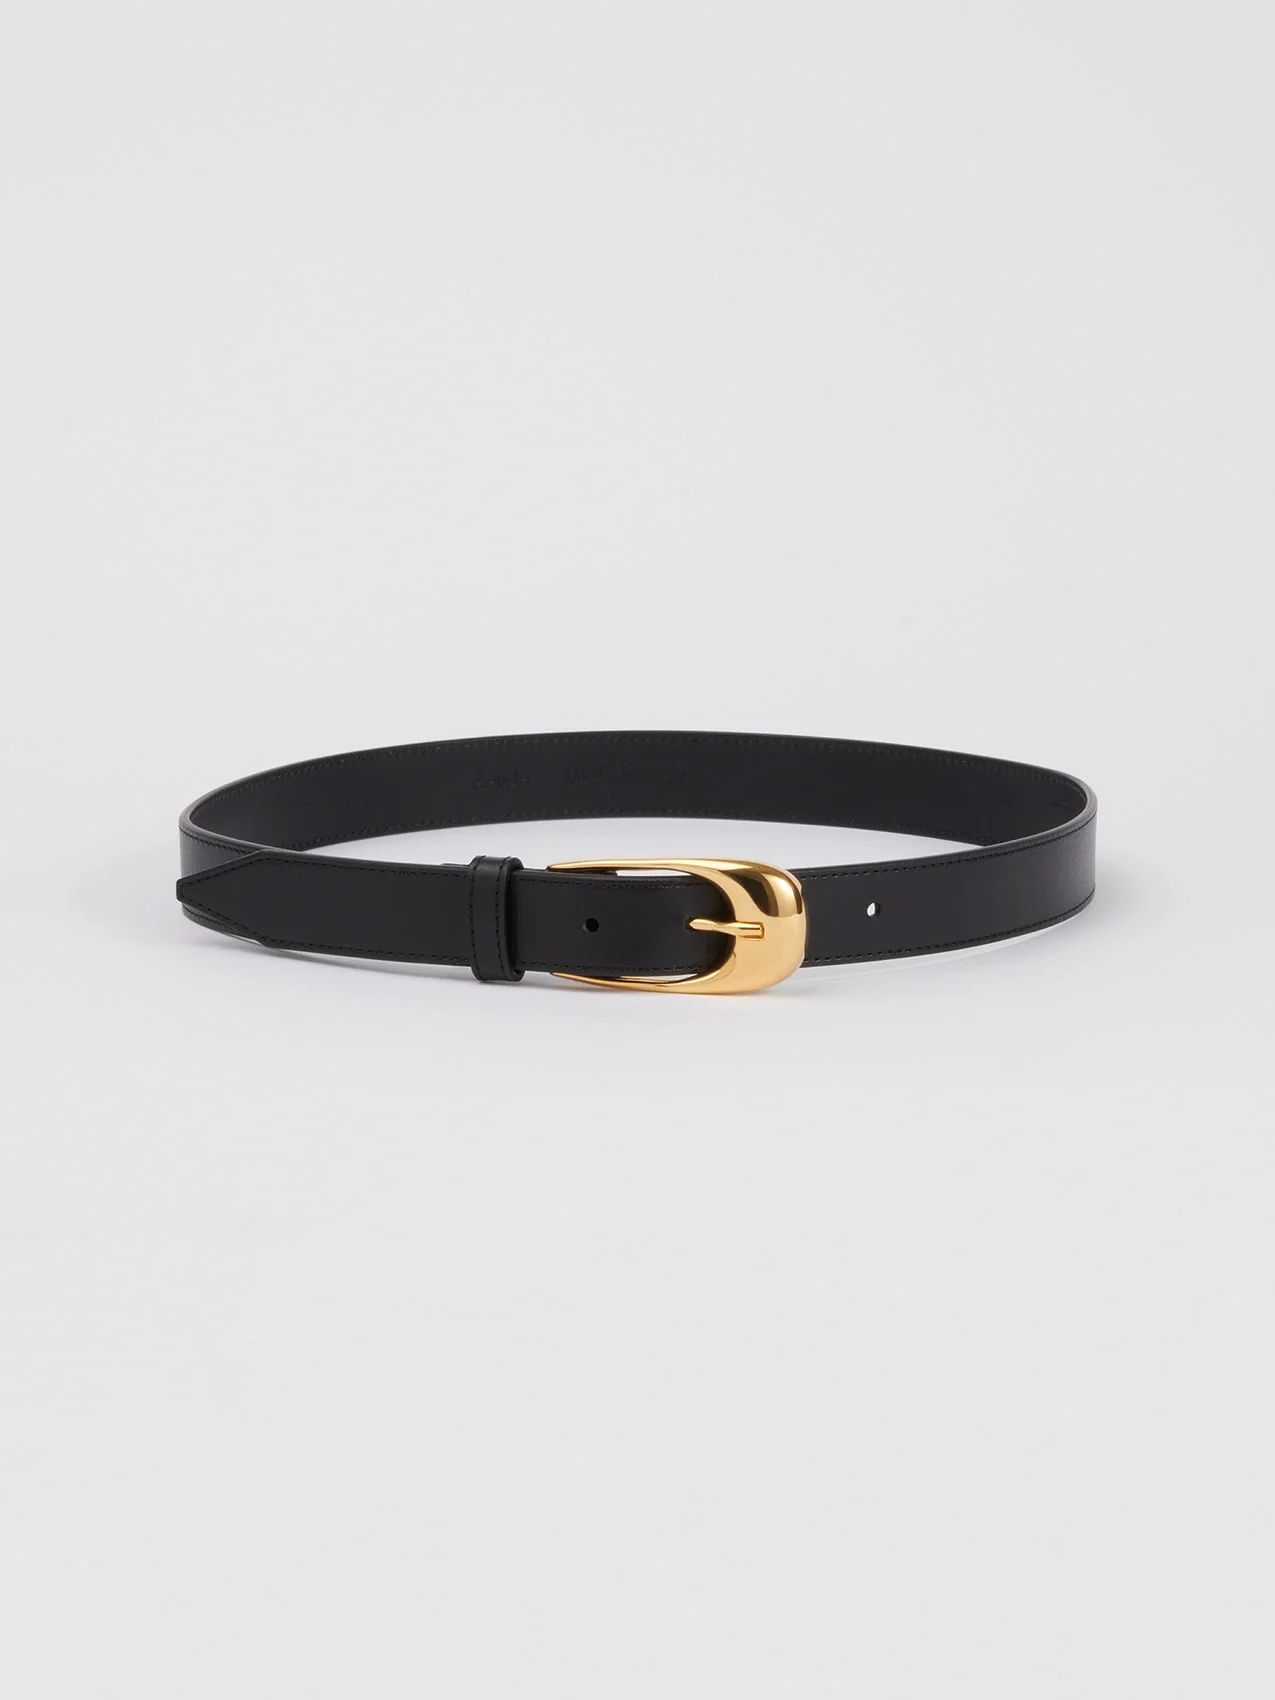 Leona Black/Gold Calf
€175
 | aeyde.com